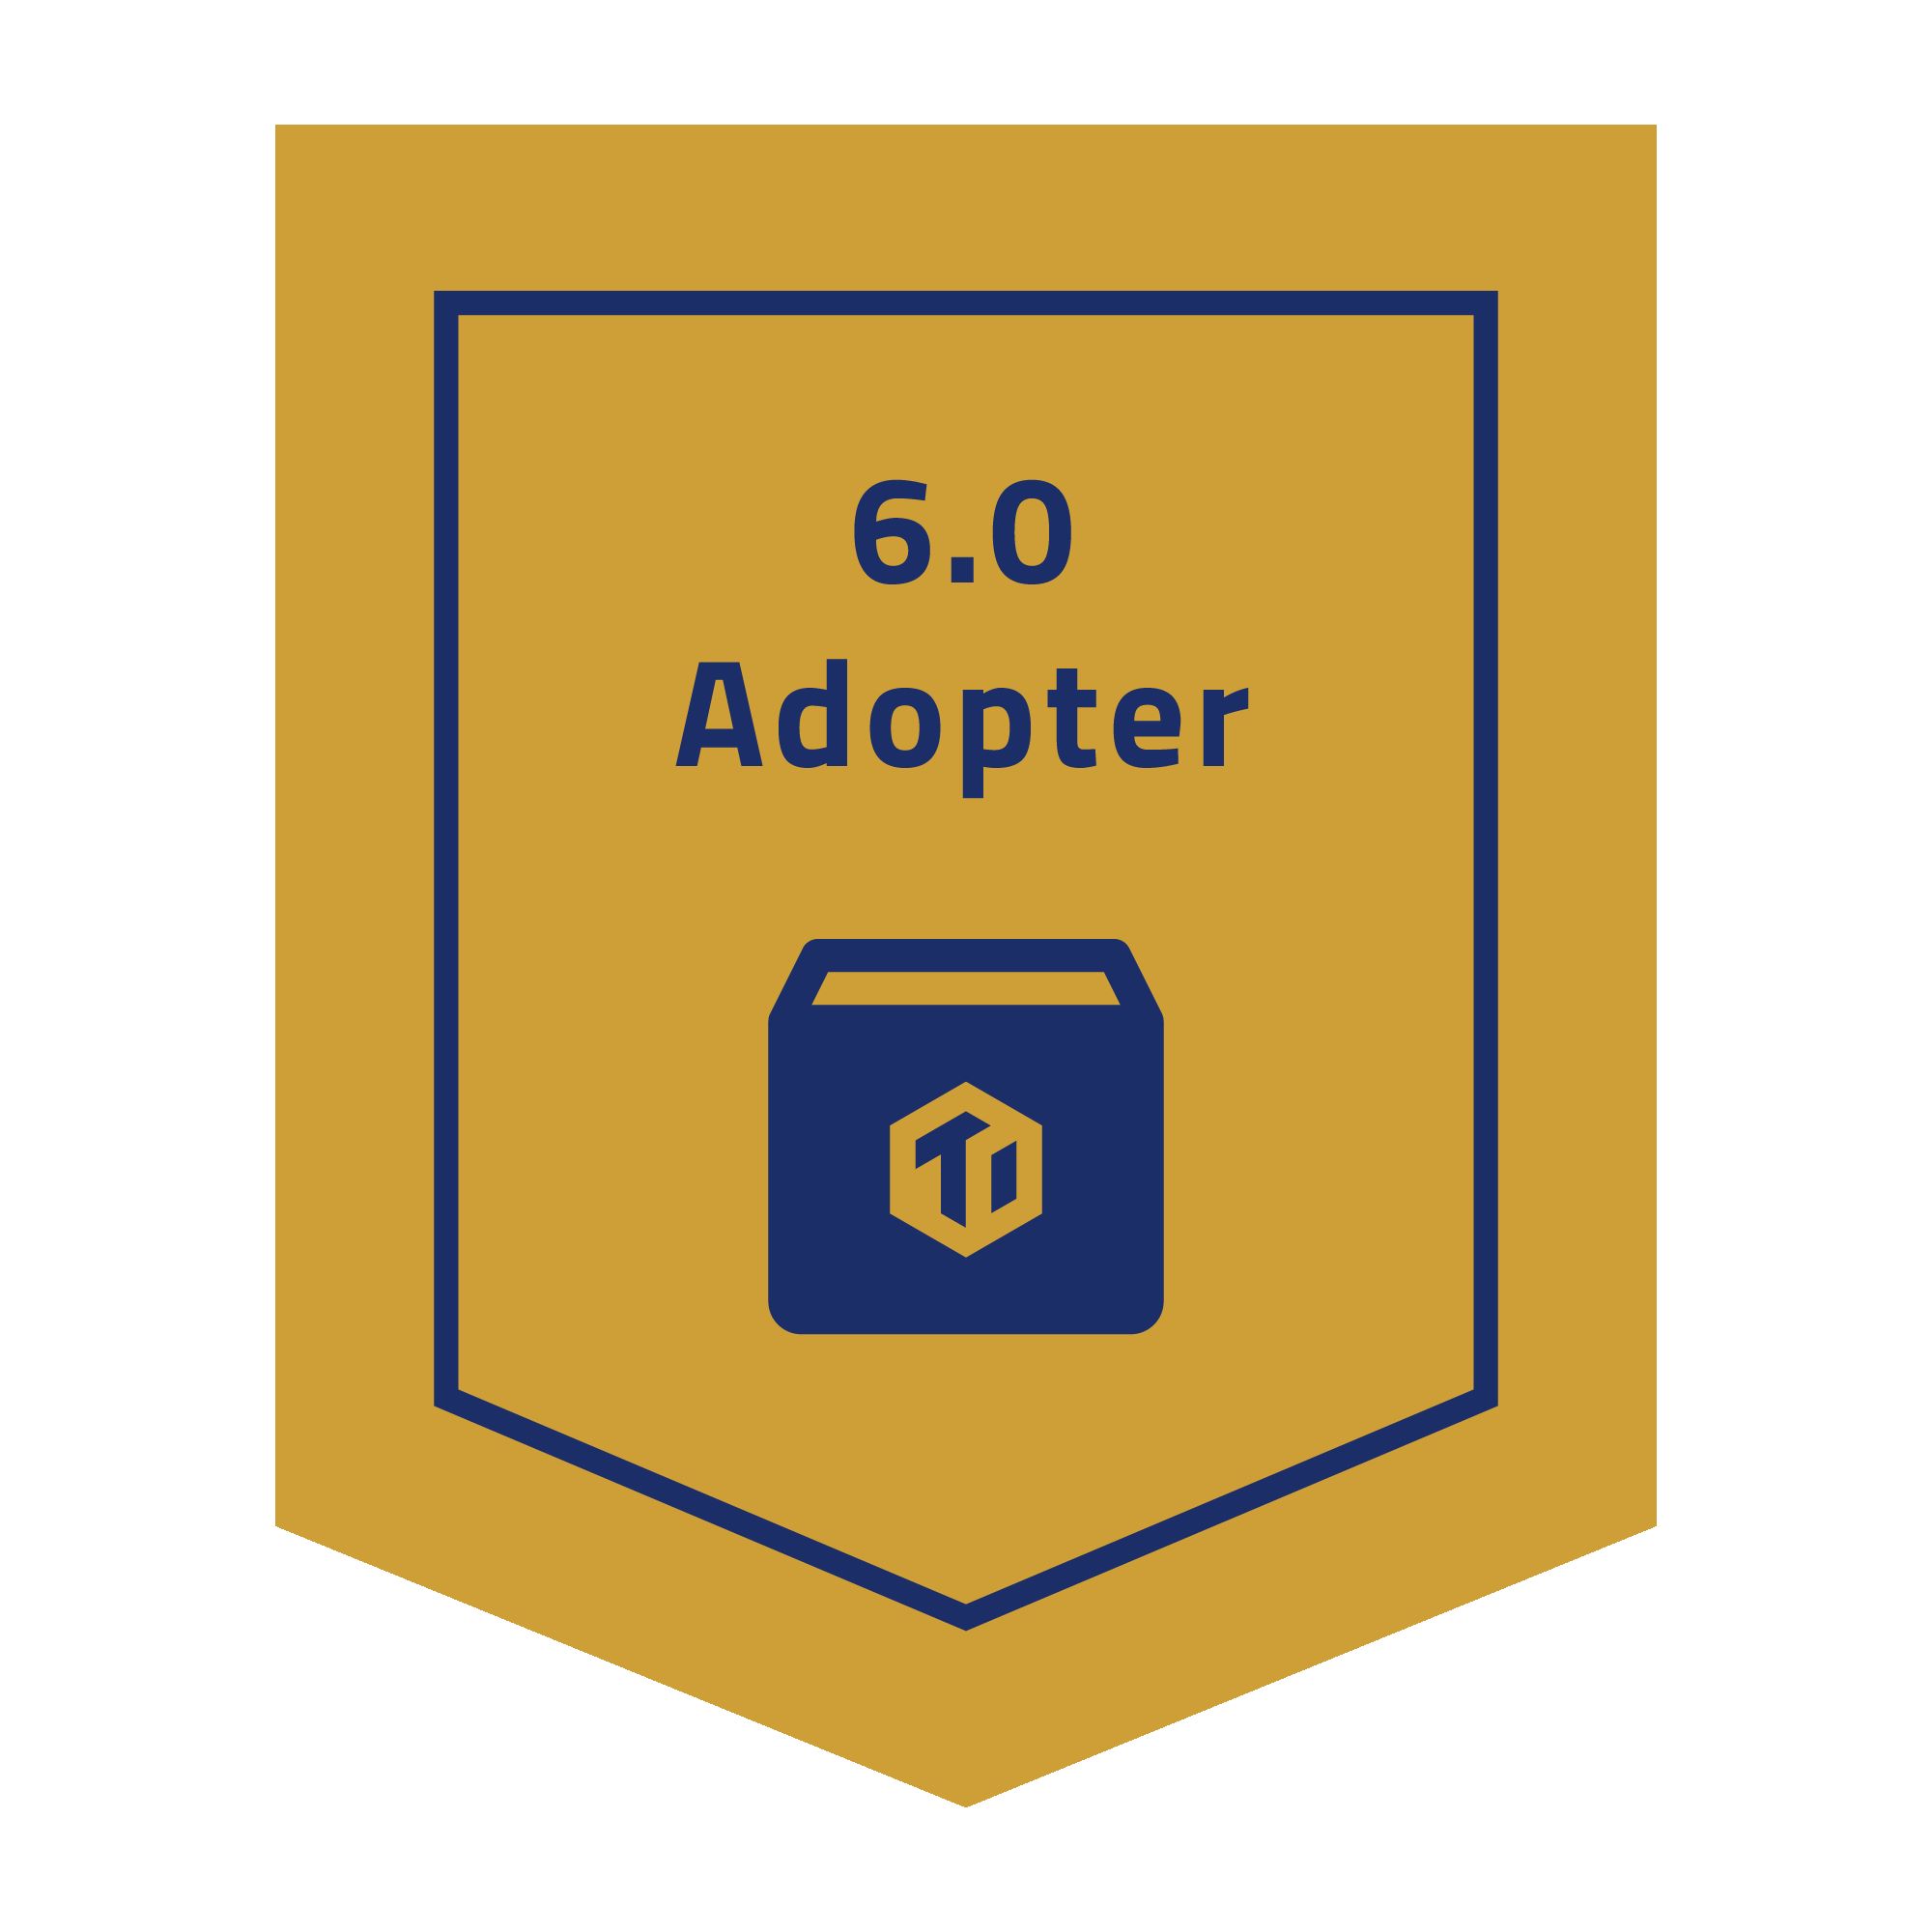 6.0 Adopter